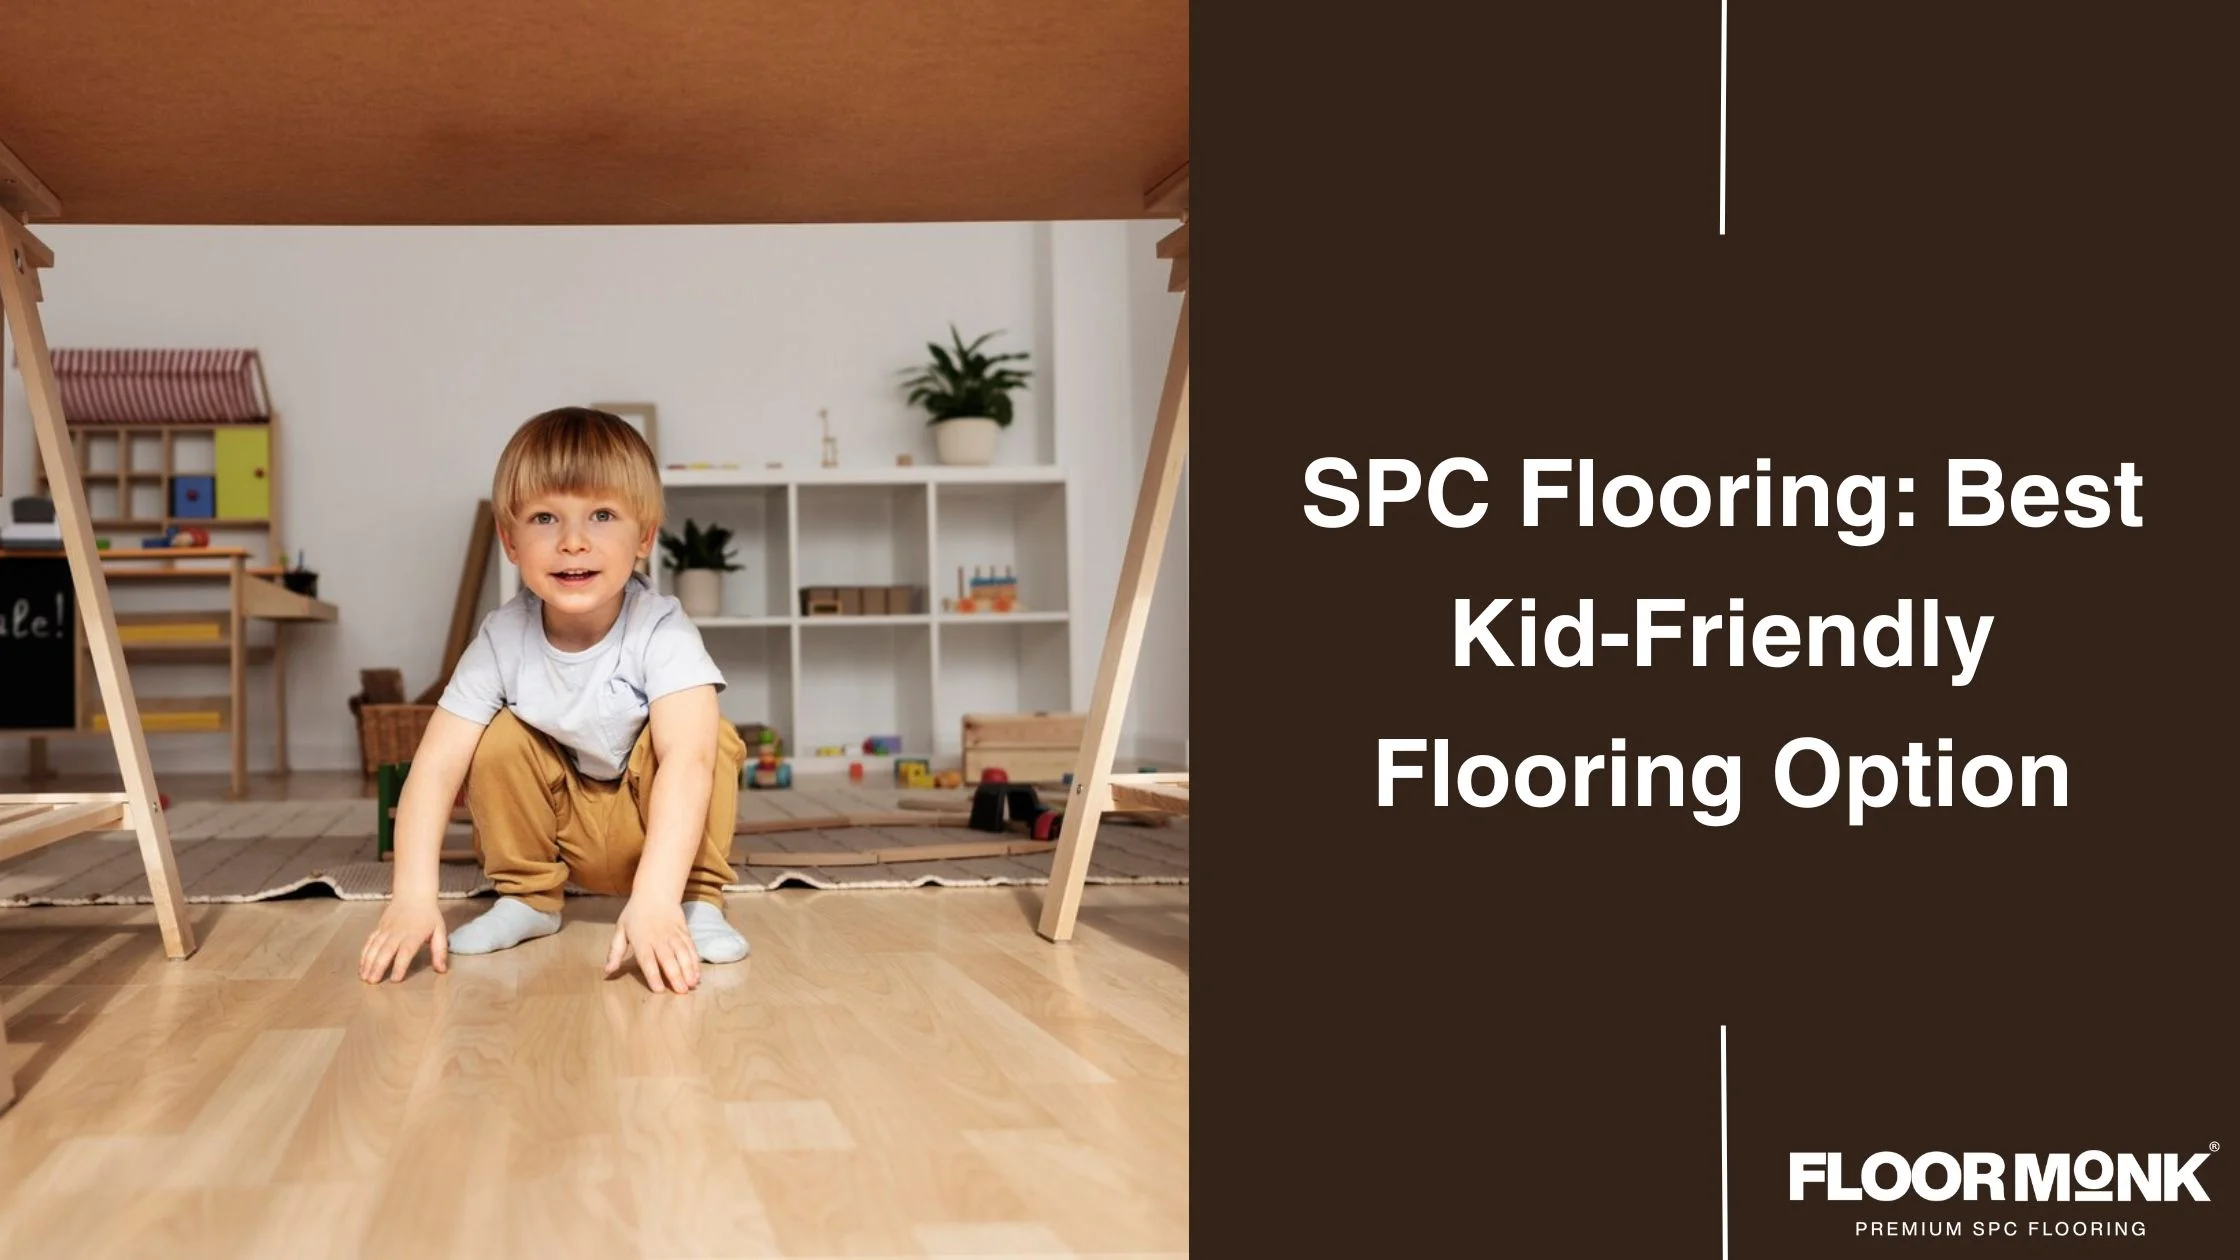 SPC Flooring: Best Kid-Friendly Flooring Option